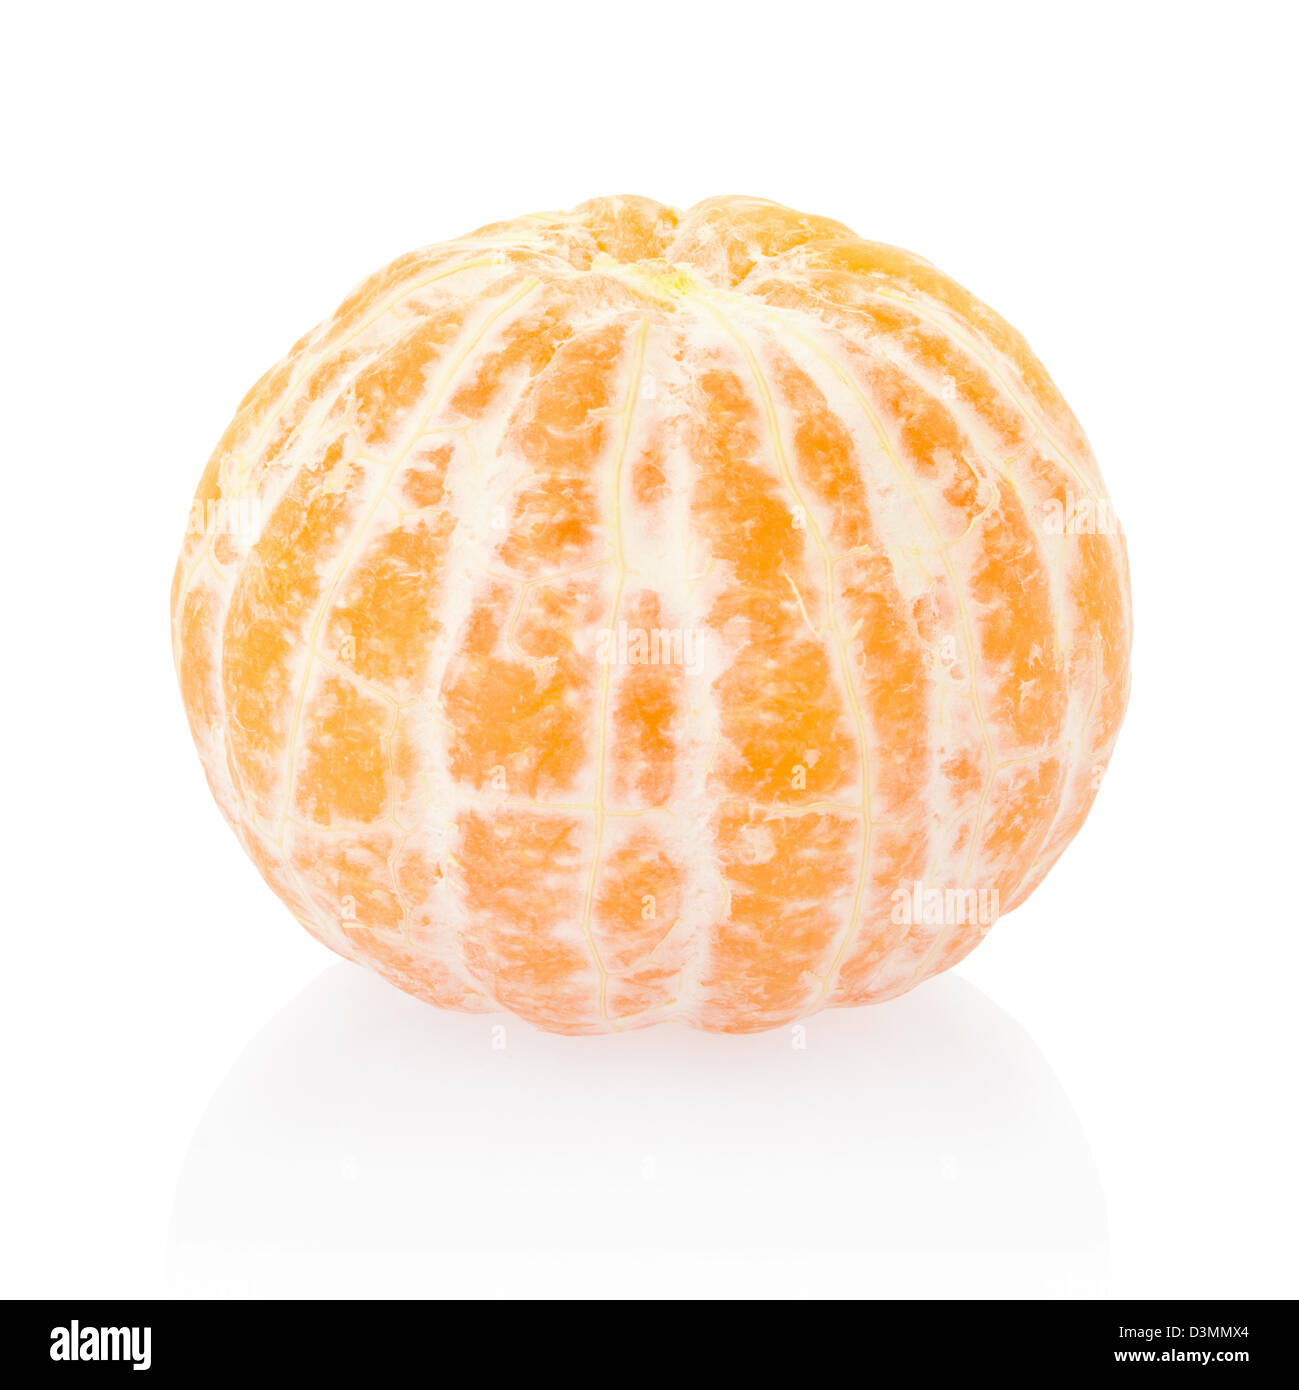 Tangerine senza cotenna Foto Stock